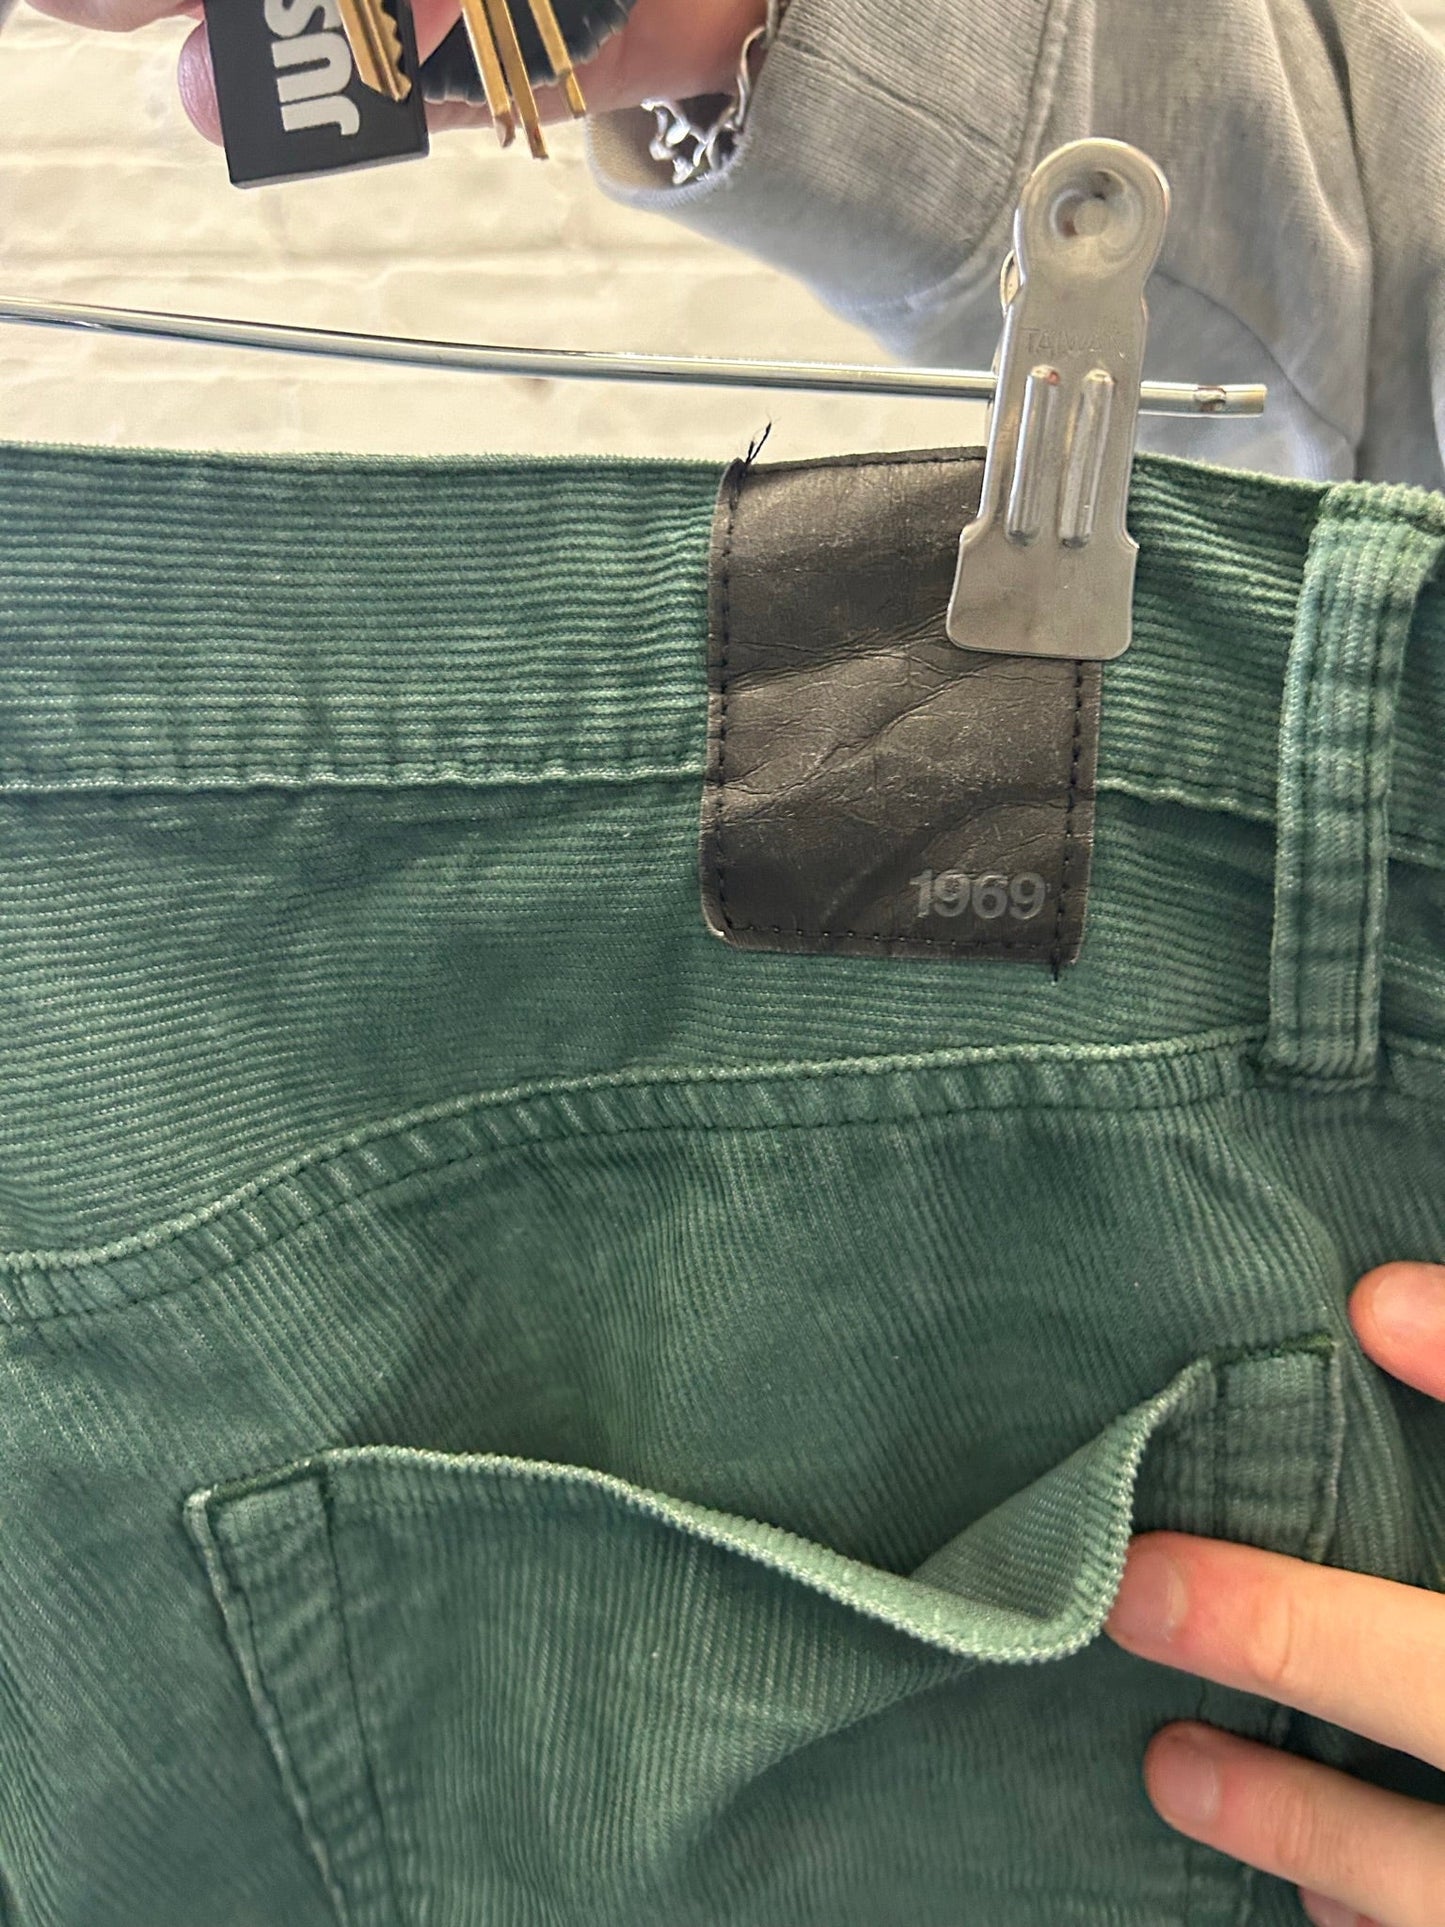 Gap Green Corduoy Pants